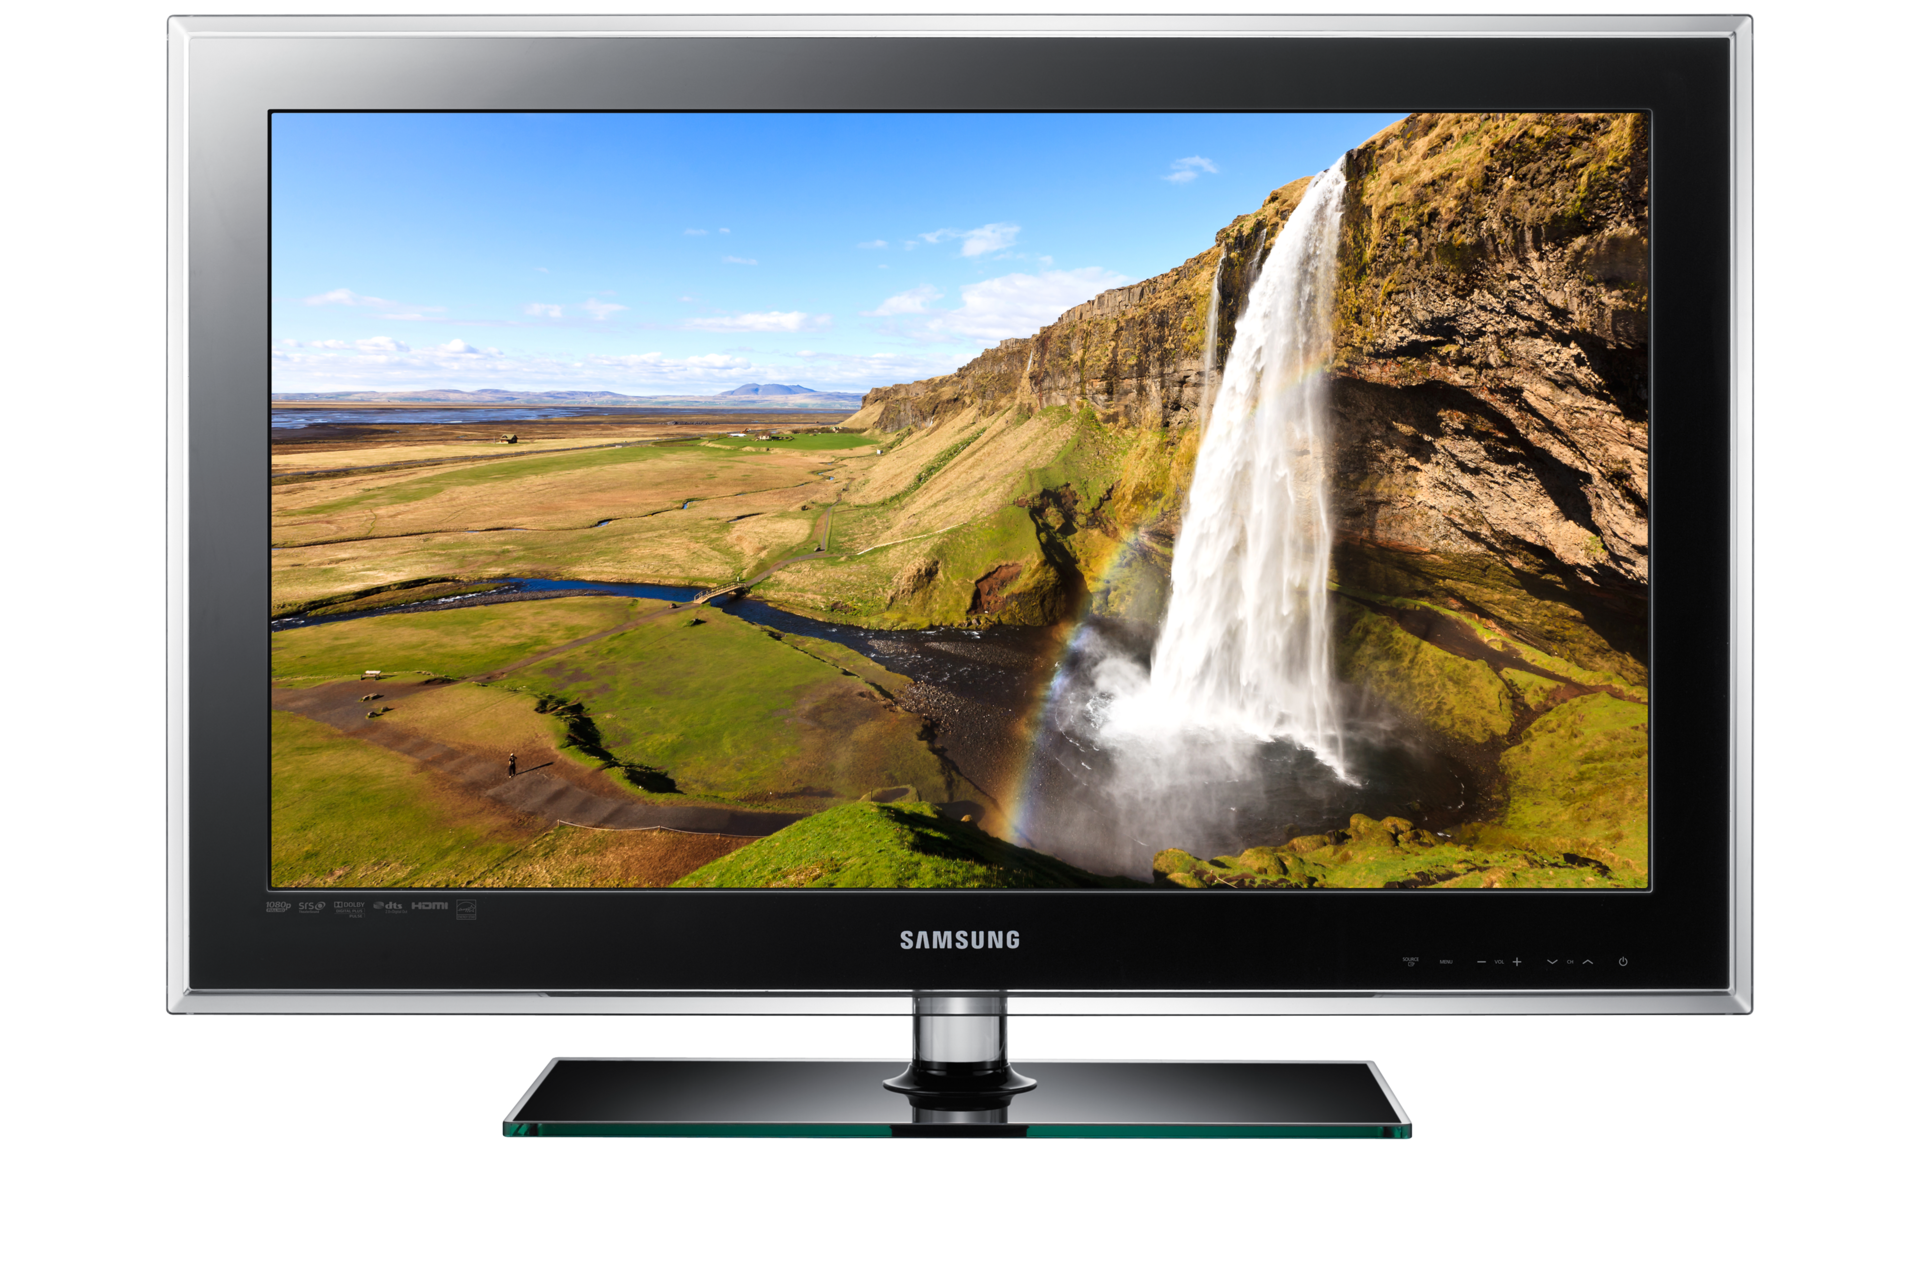 40 551 Series full HD Widescreen LCD TV